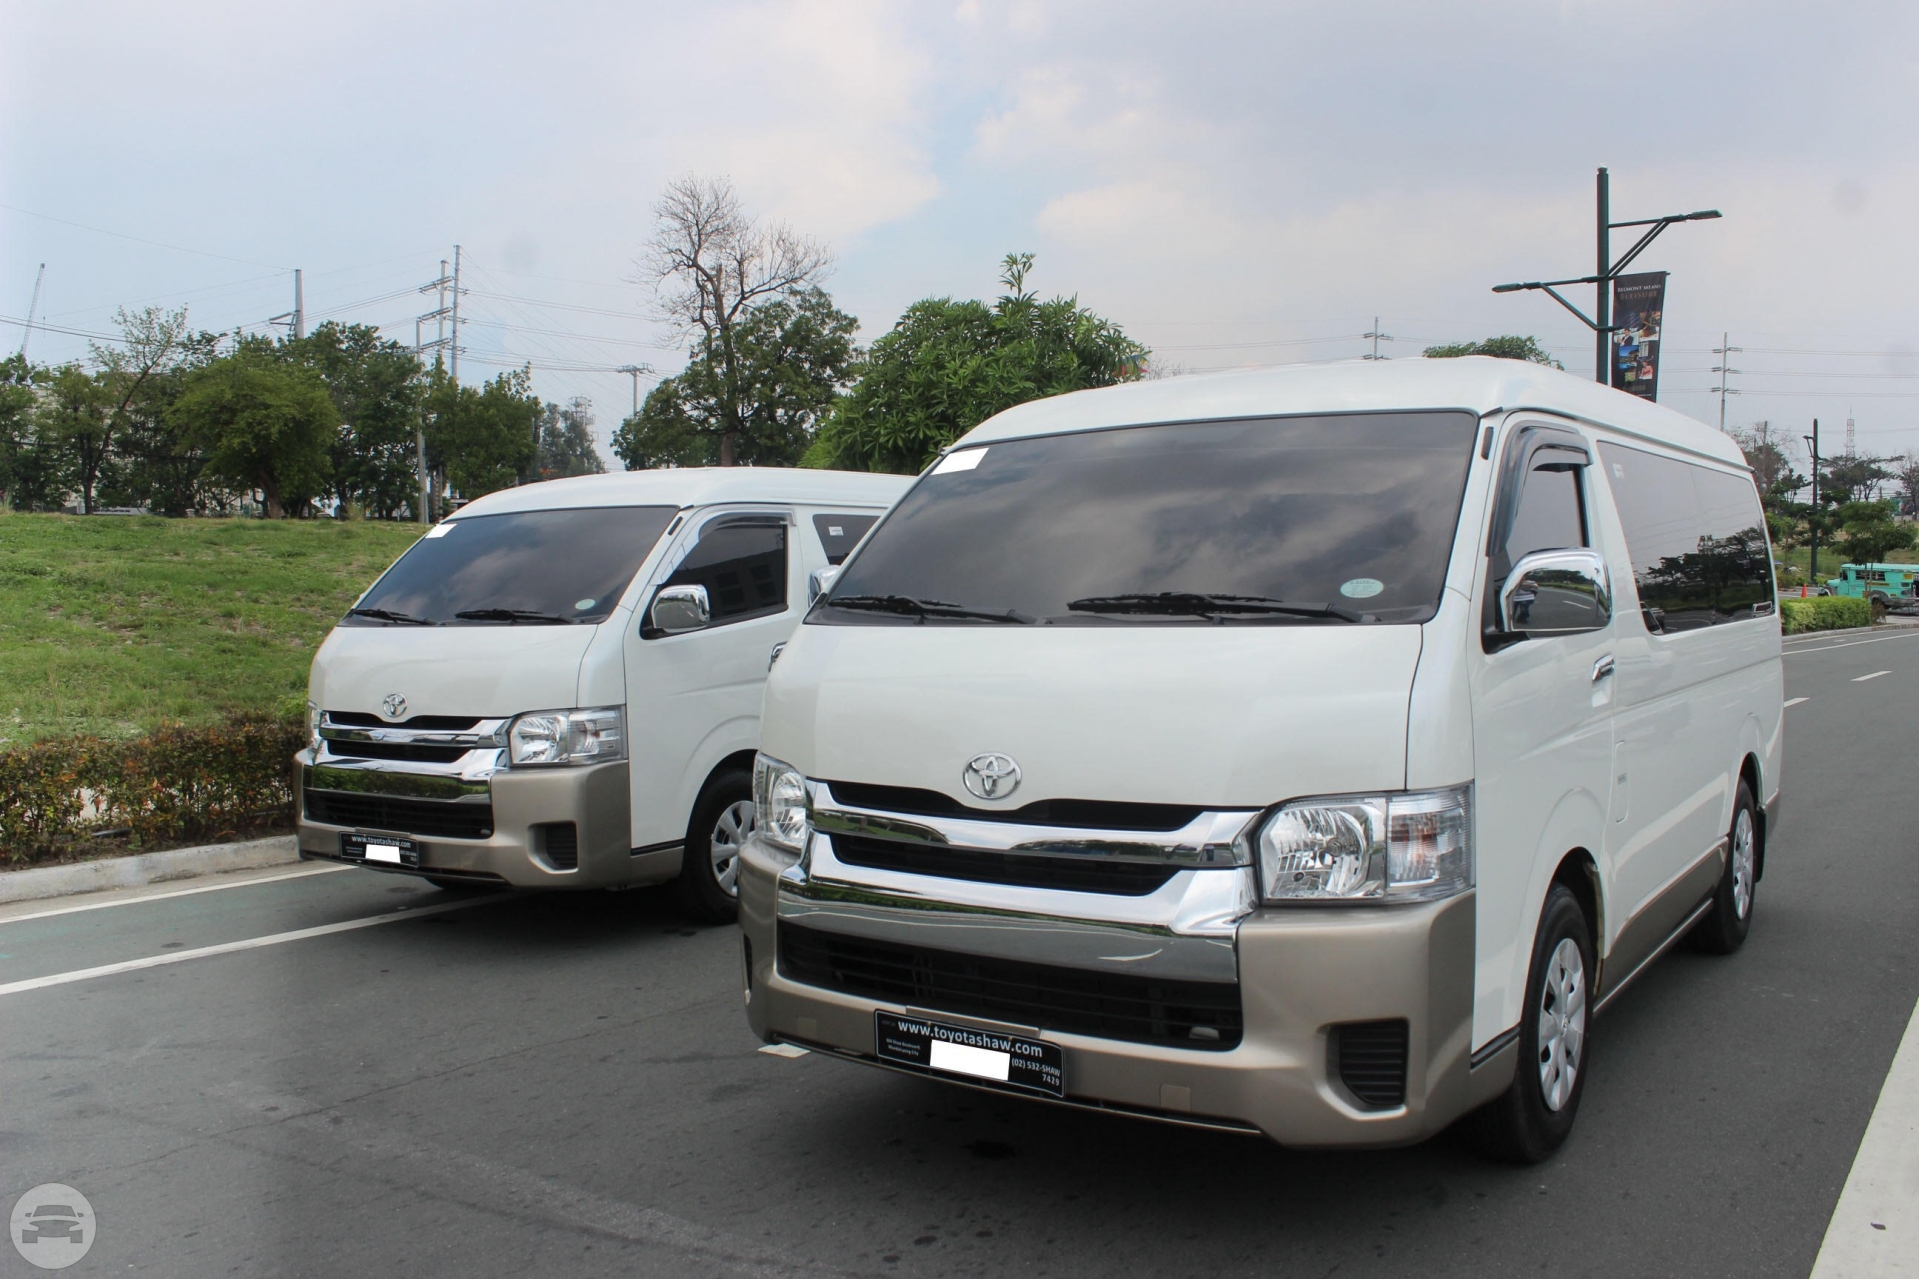 10-12 Seater Toyota GL Grandia
Van /
Taguig, Metro Manila

 / Airport Transfer ₱3,000.00
 / Daily ₱3,500.00
